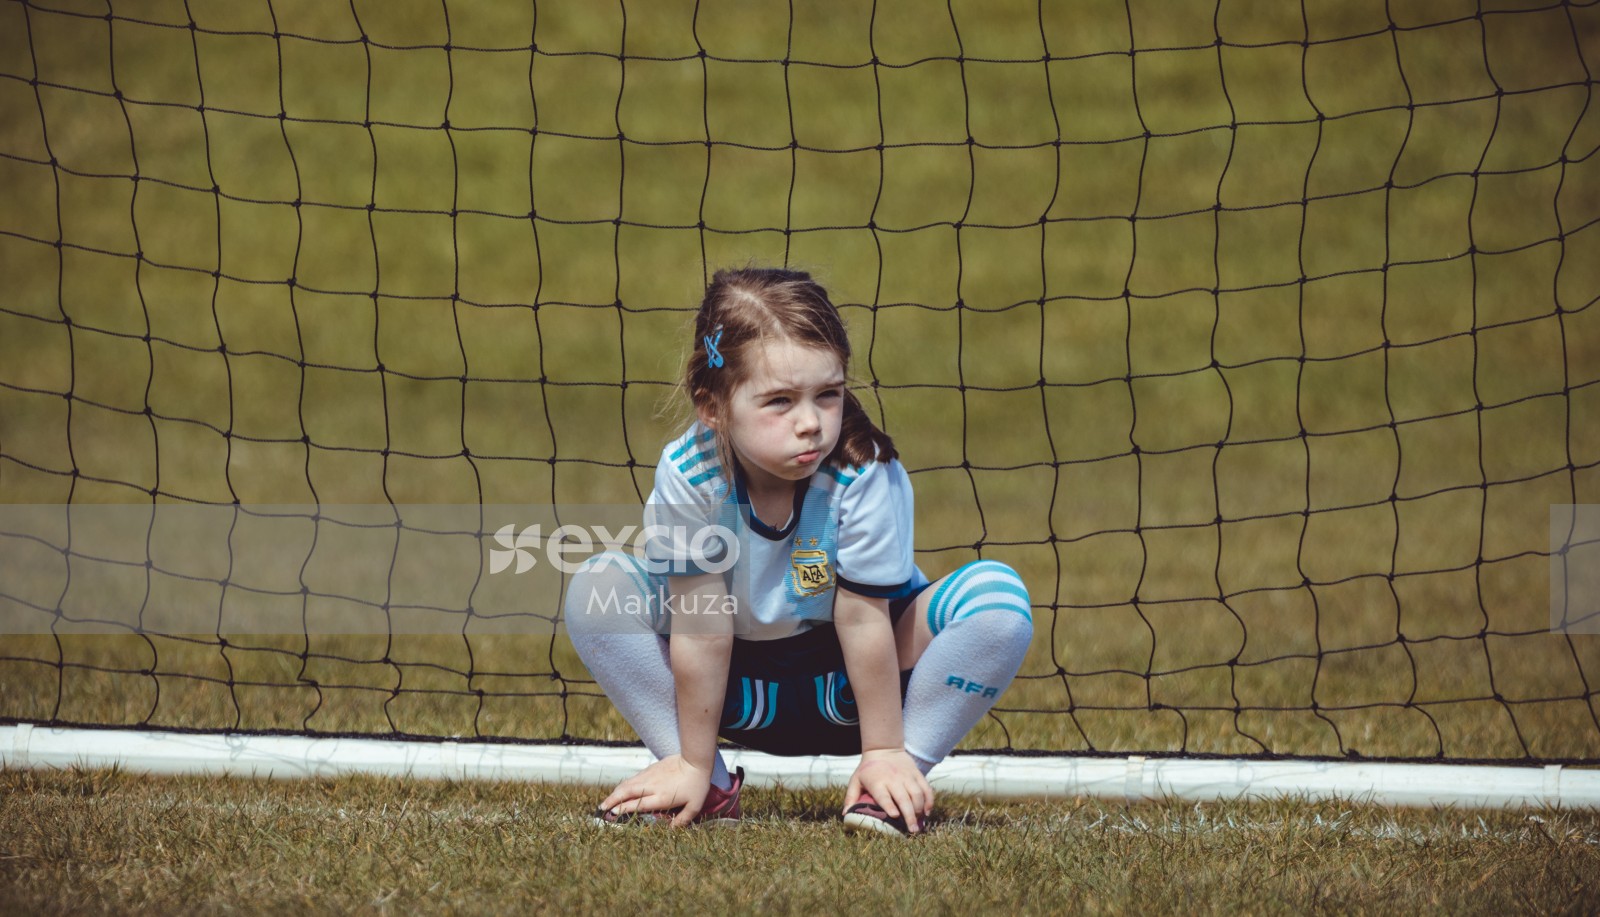 Goal keeper girl wearing Argentina kit - Little Dribblers